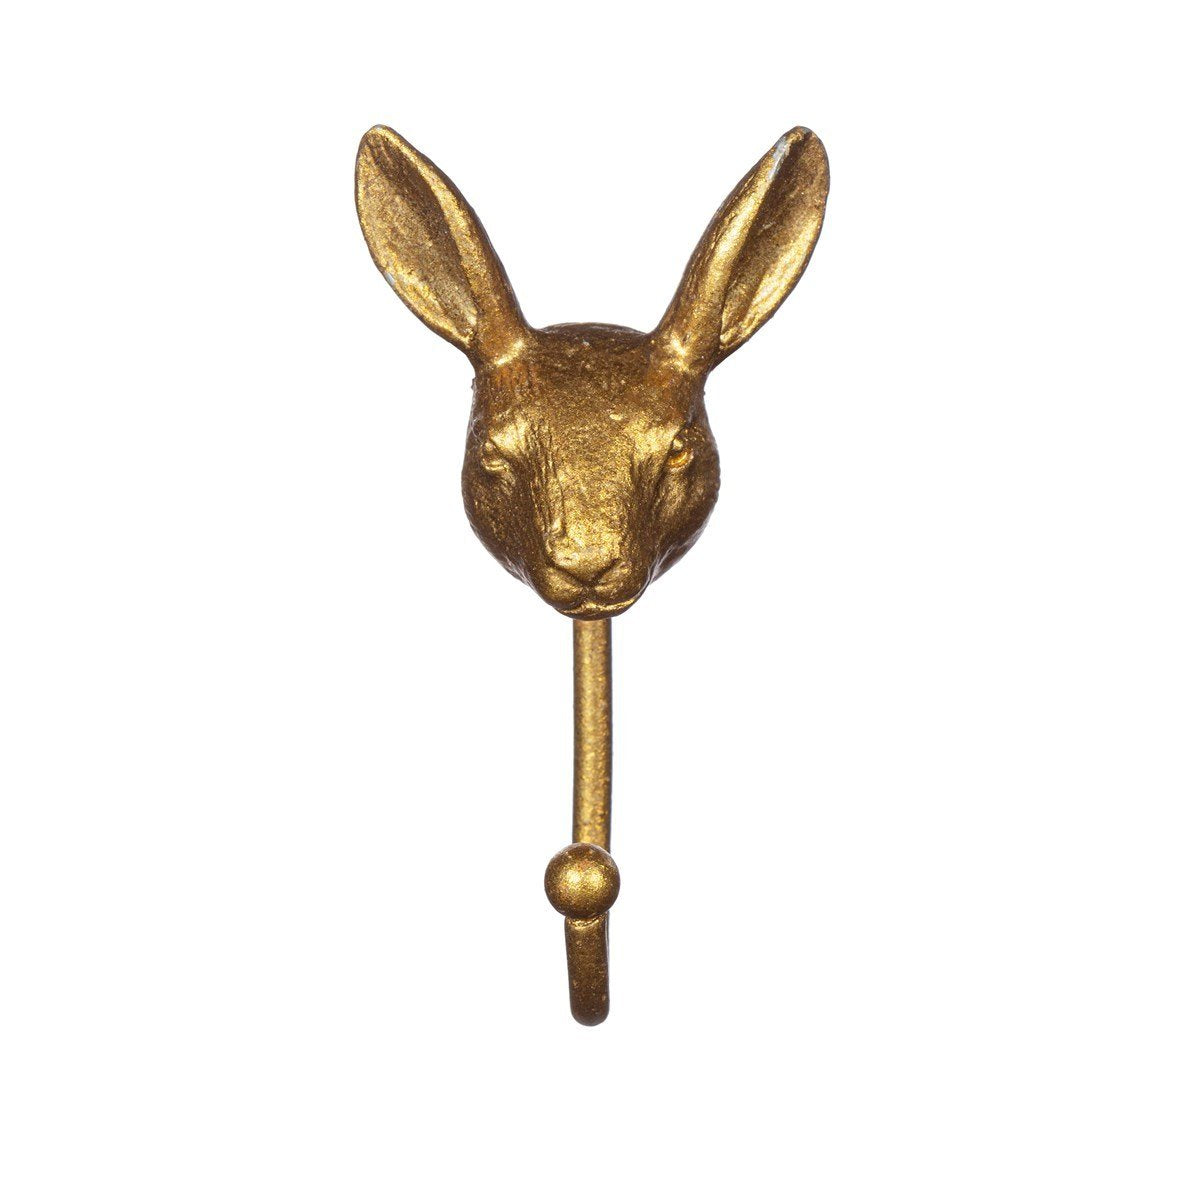 View Gold Rabbit Hook information